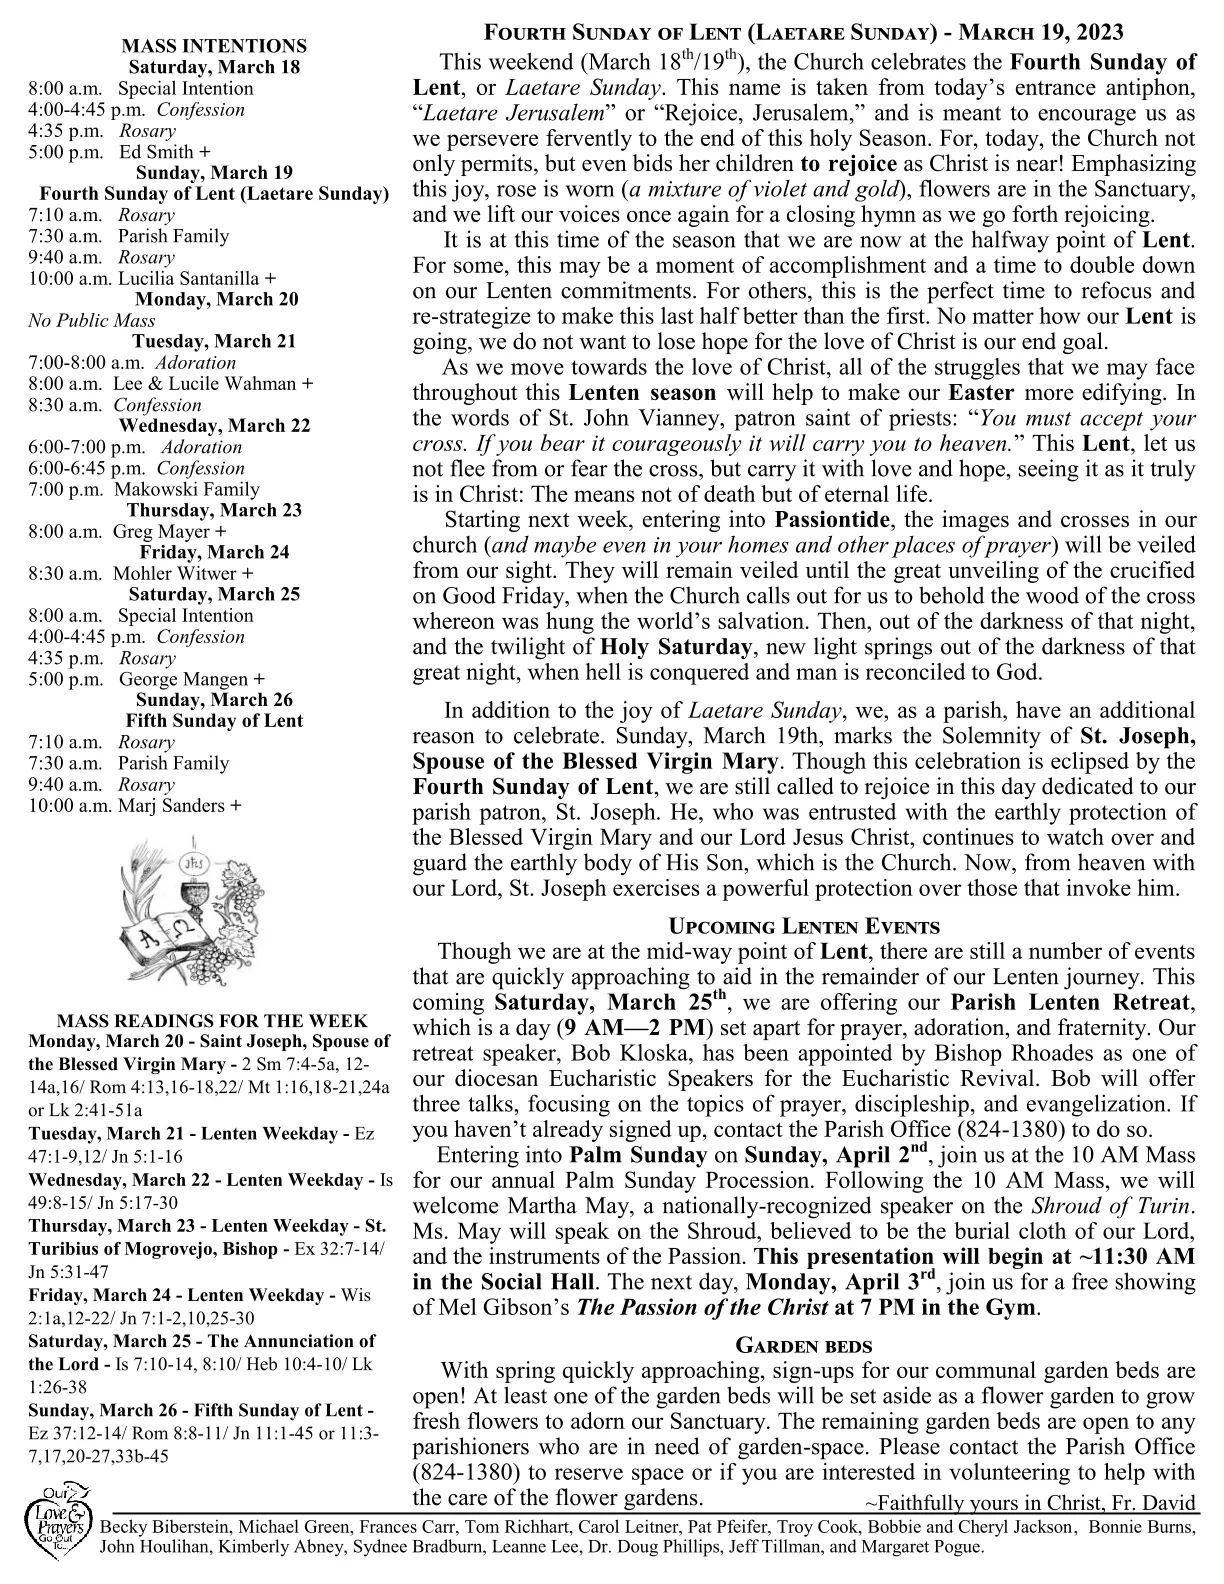 Mar 19, 2023 - Bulletin - Page 2